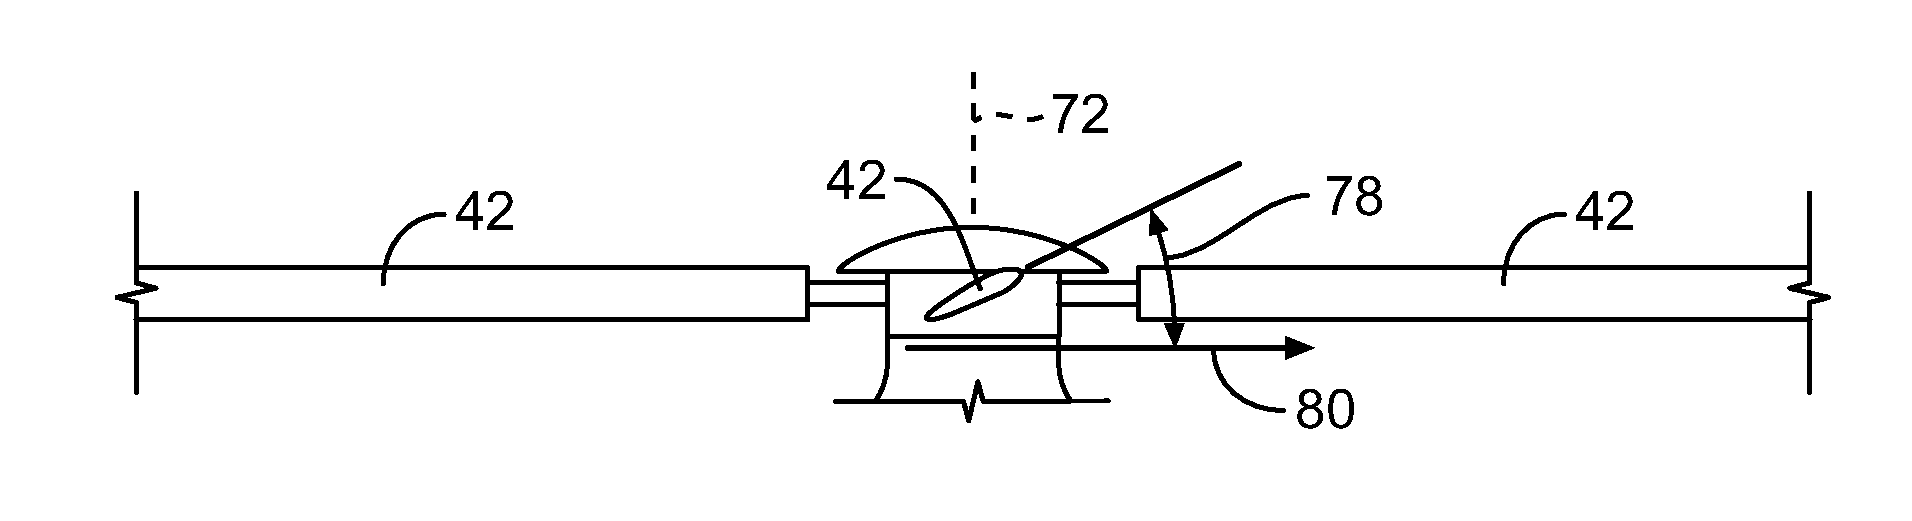 Rotor hub and blade root fairing apparatus and method